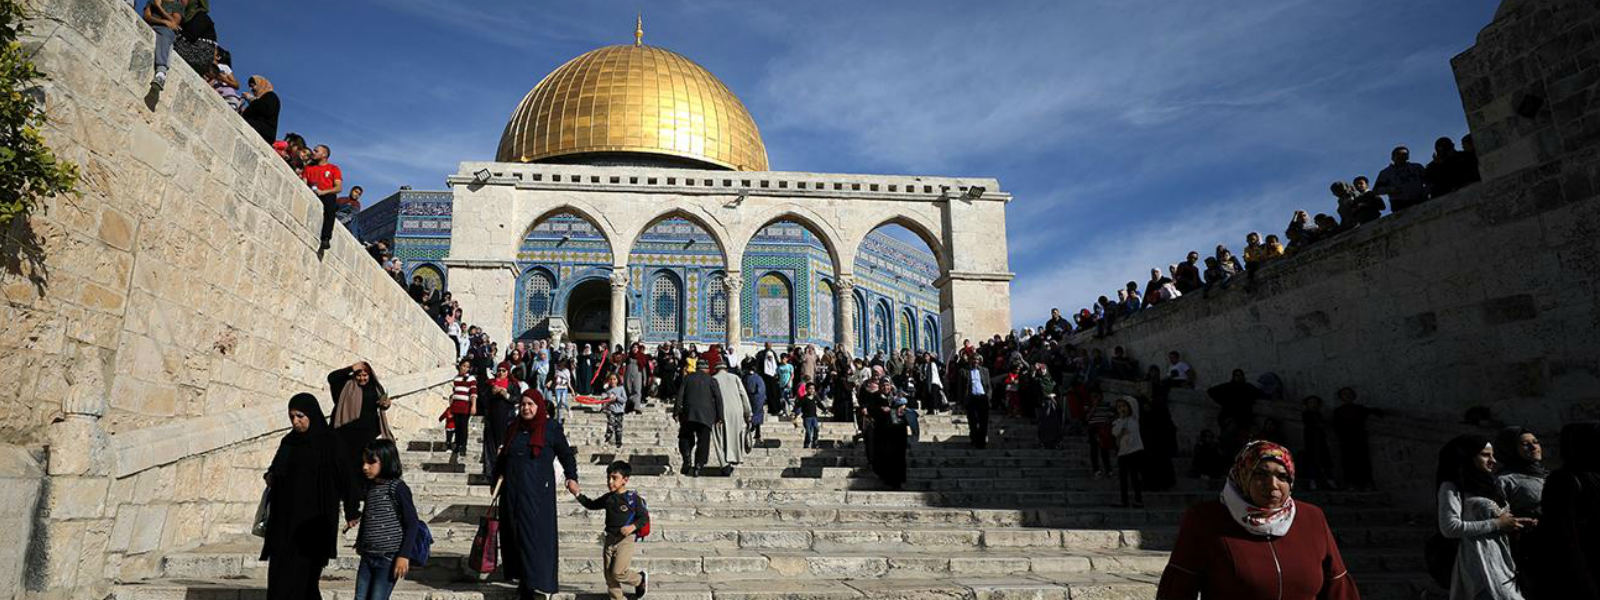 Australia recognises Jerusalem as Israel's capital